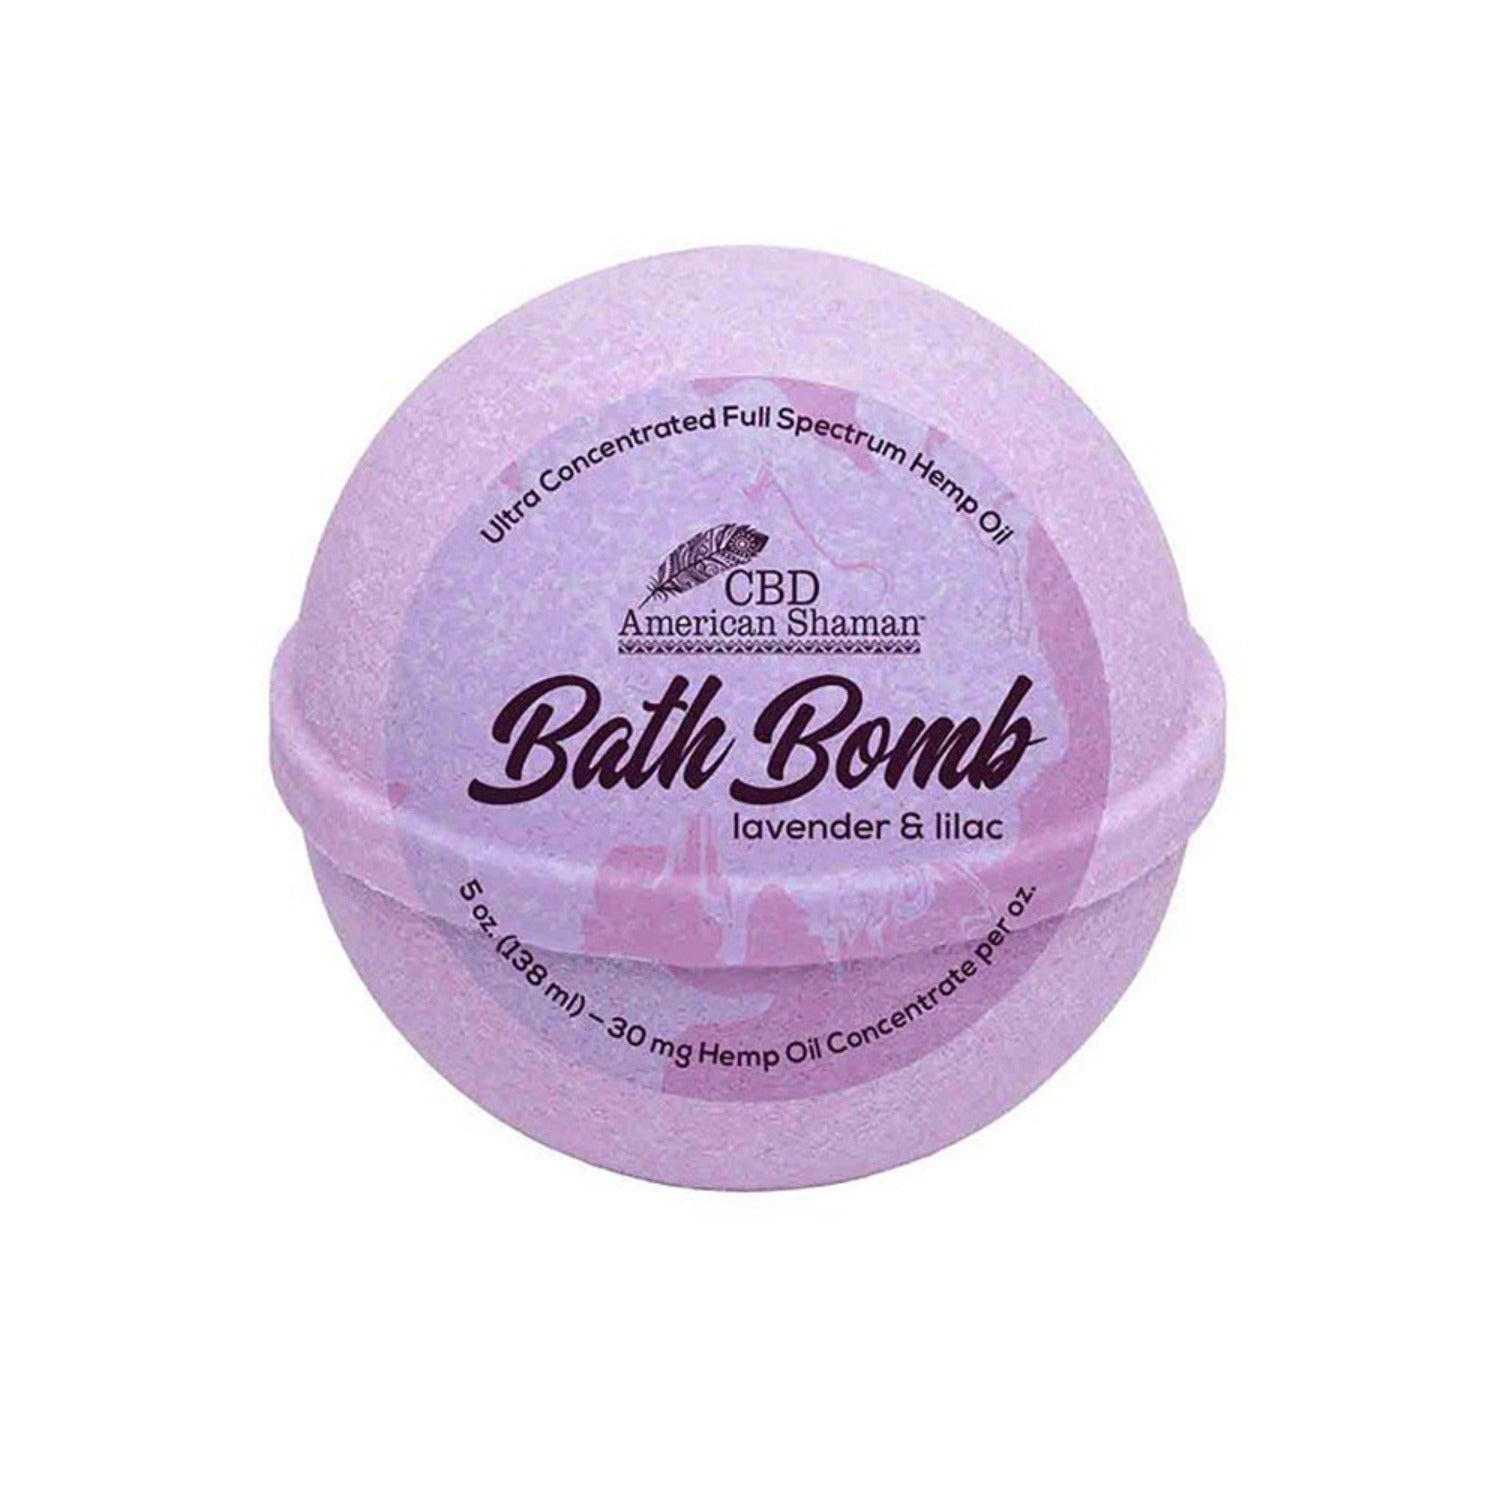 Bath Bomb - 5 oz.